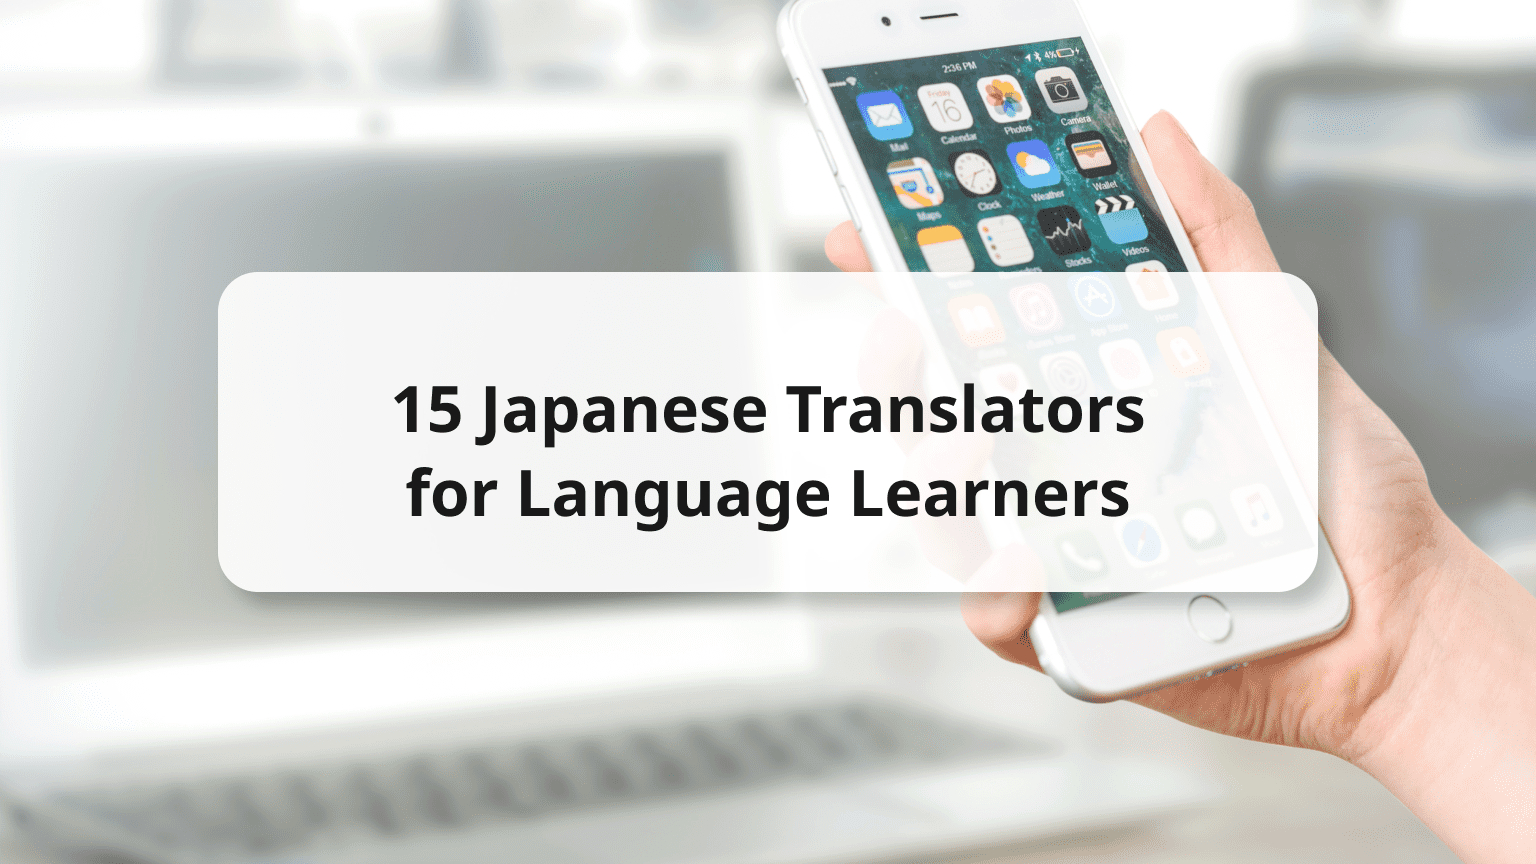 Top 15 Japanese Translators for Language Learners